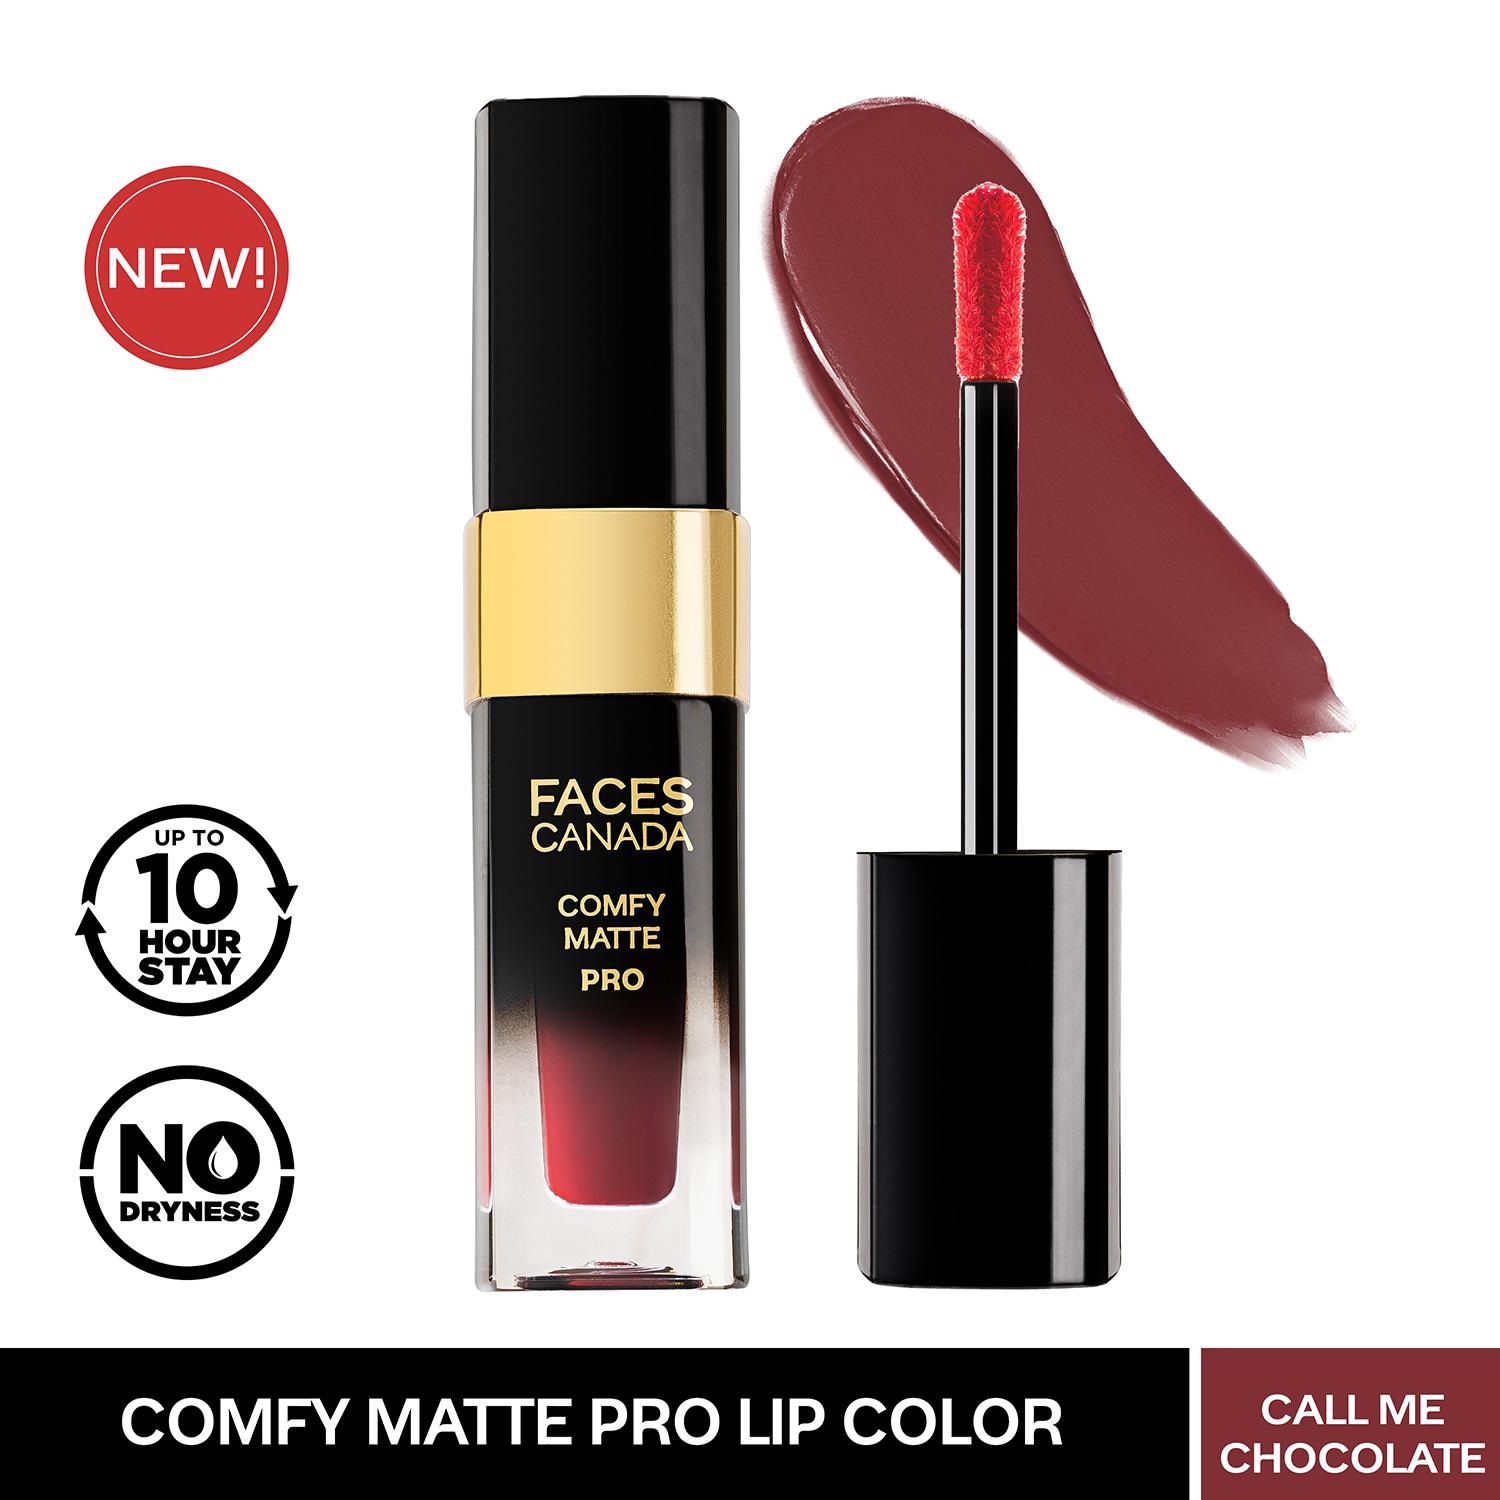 Faces Canada | Faces Canada Comfy Matte Pro Liquid Lipstick - Call Me Chocolate 07, 10HR Stay, No Dryness (5.5 ml)